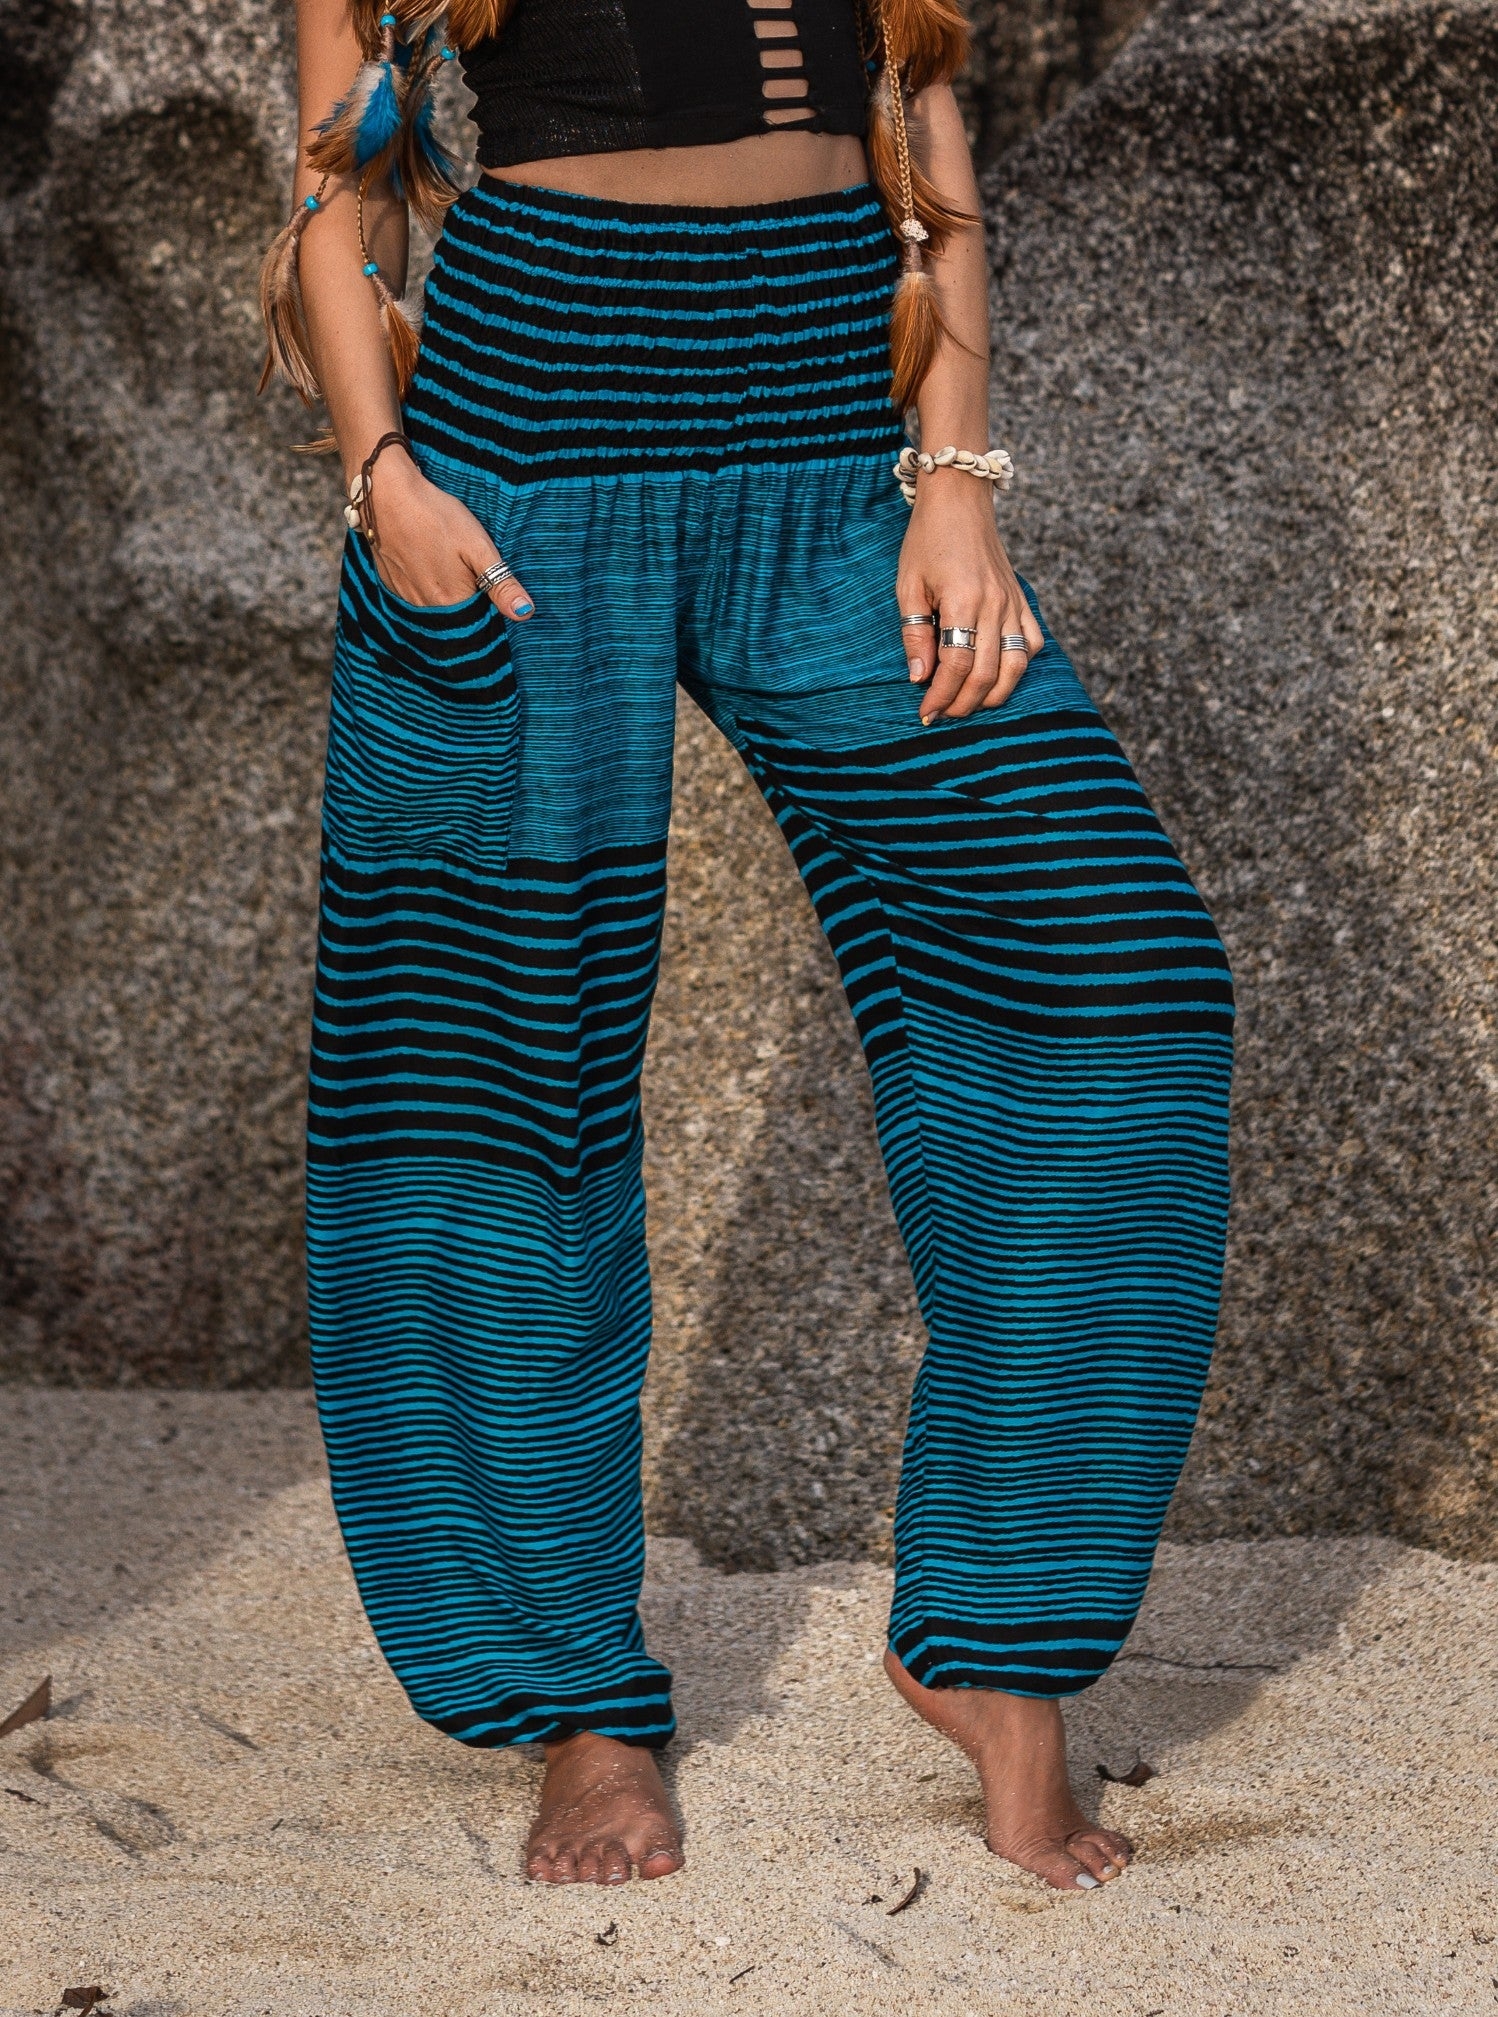 High Cut Harem Pants – Striped – Blue & Black – Small – The Karmic Chameleon